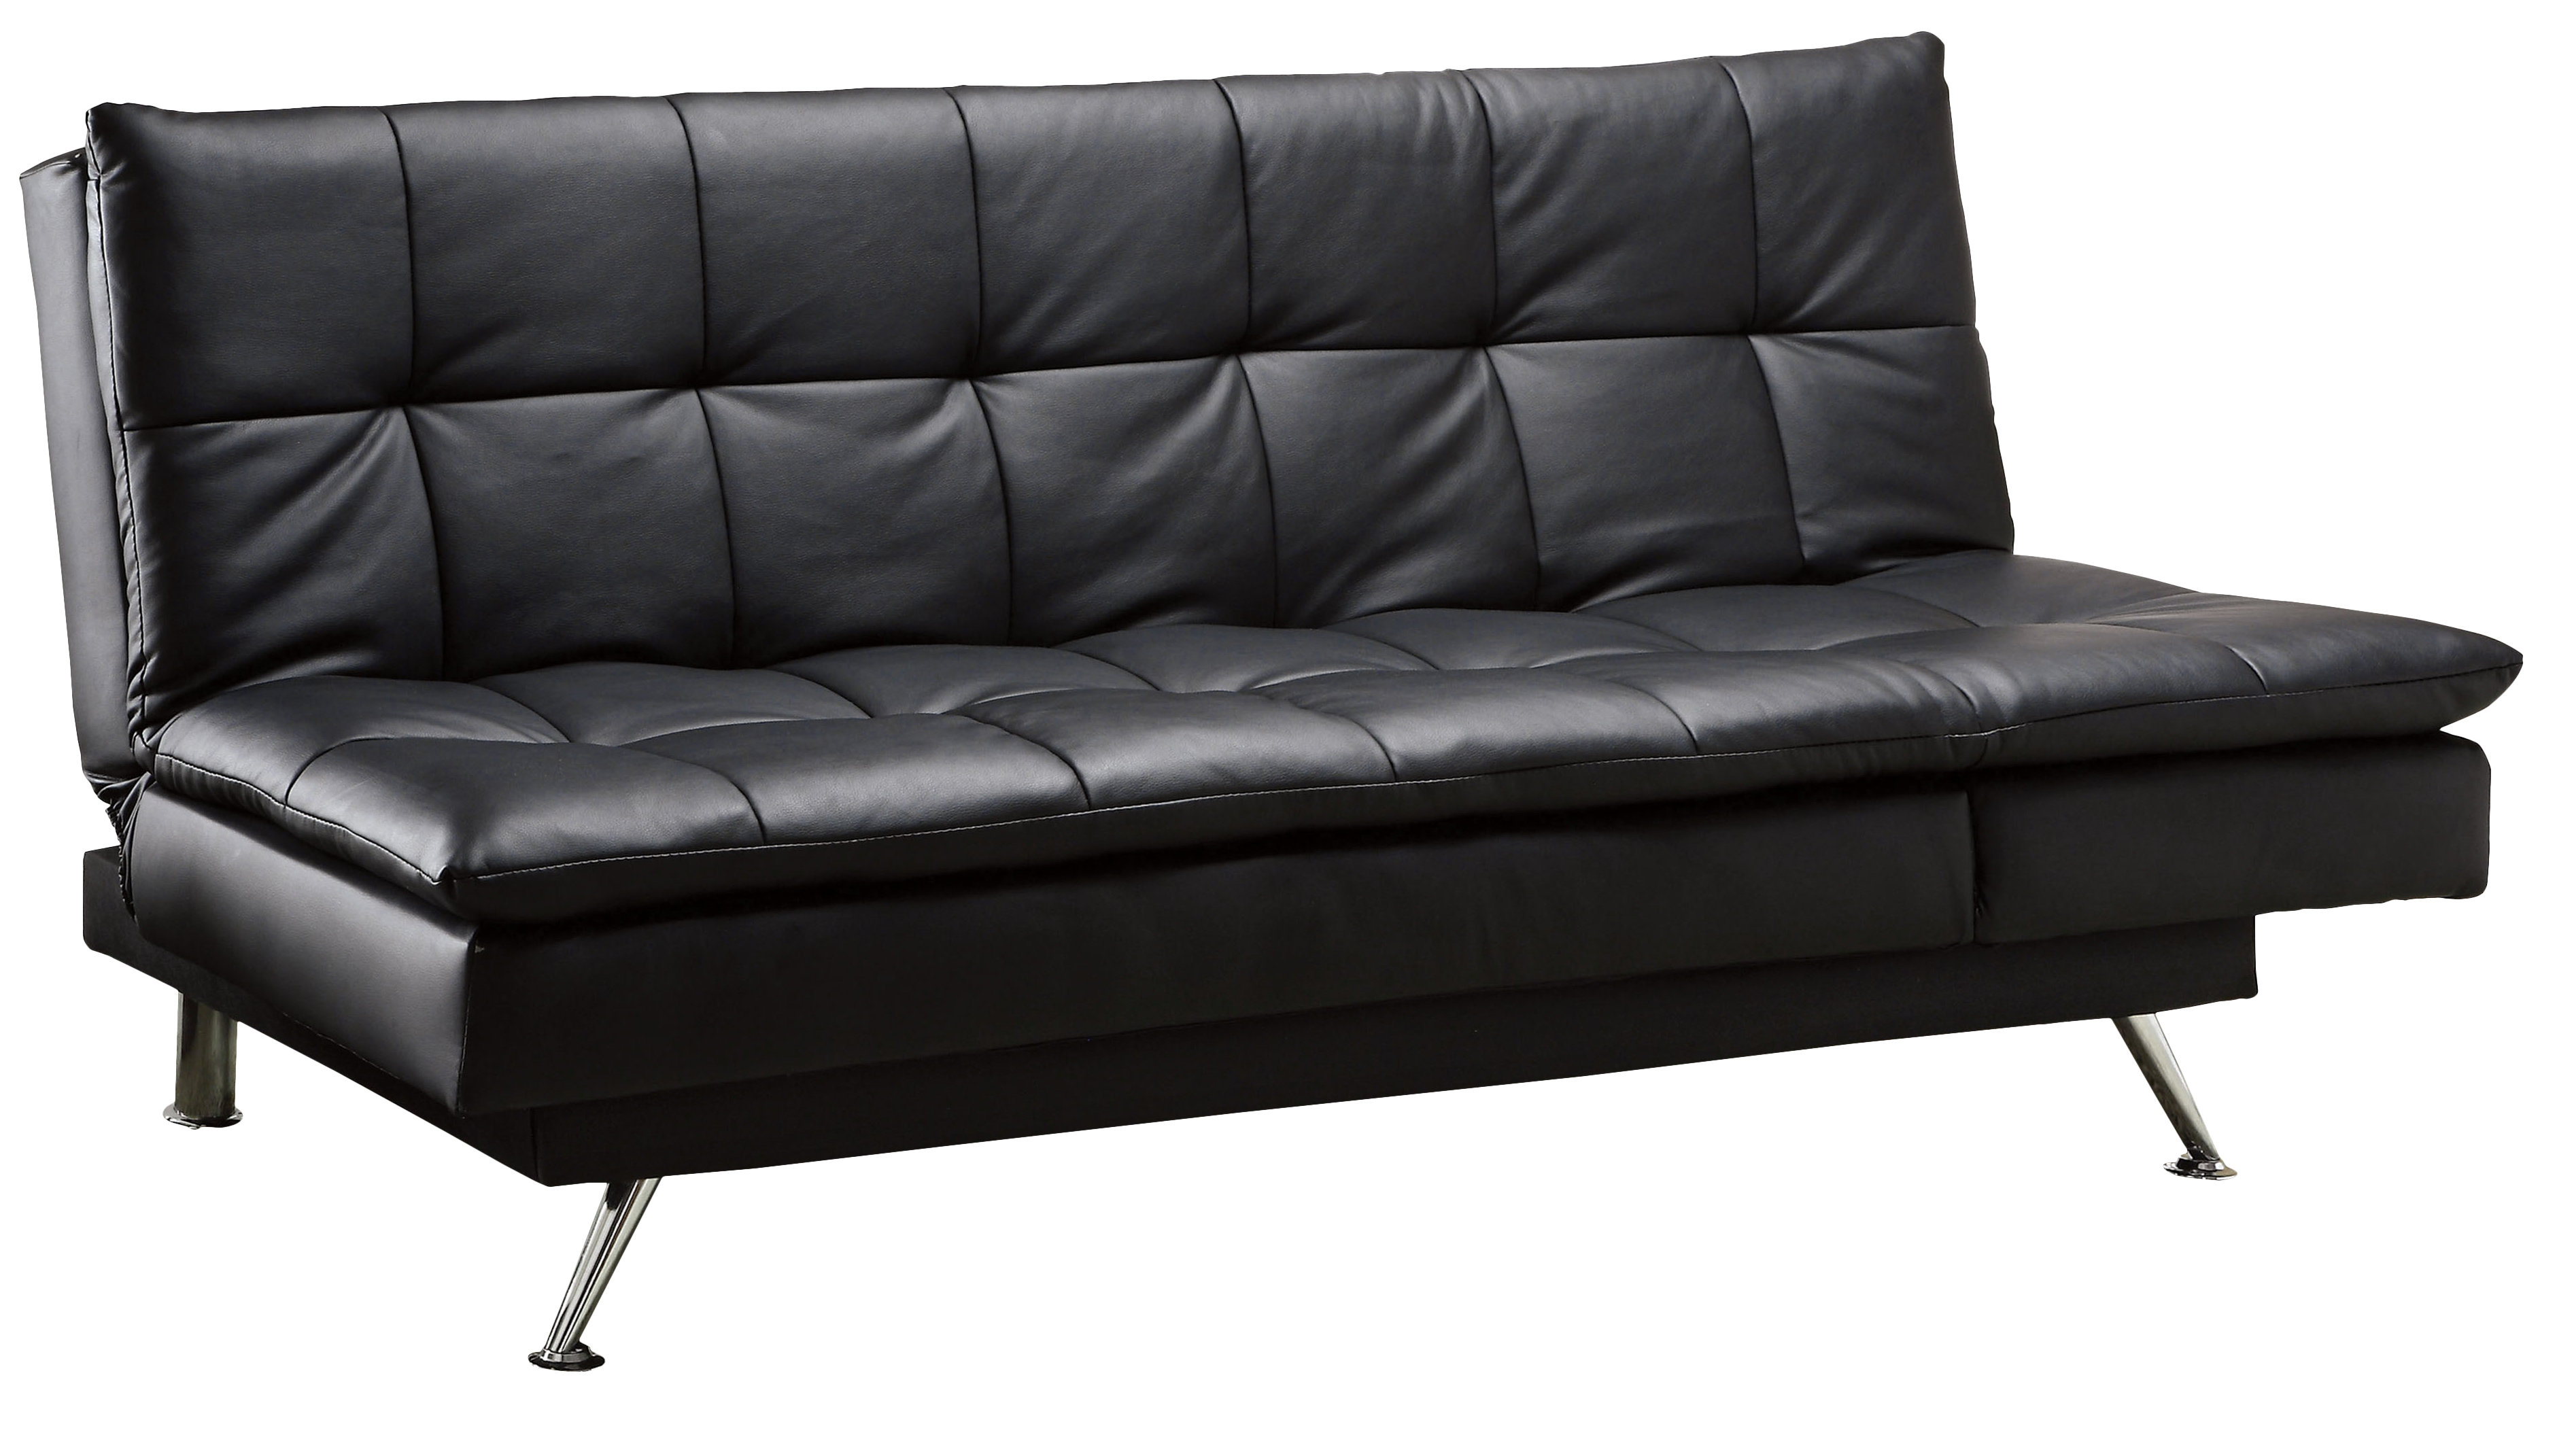 arrighetto sofa bed sleeper wayfair